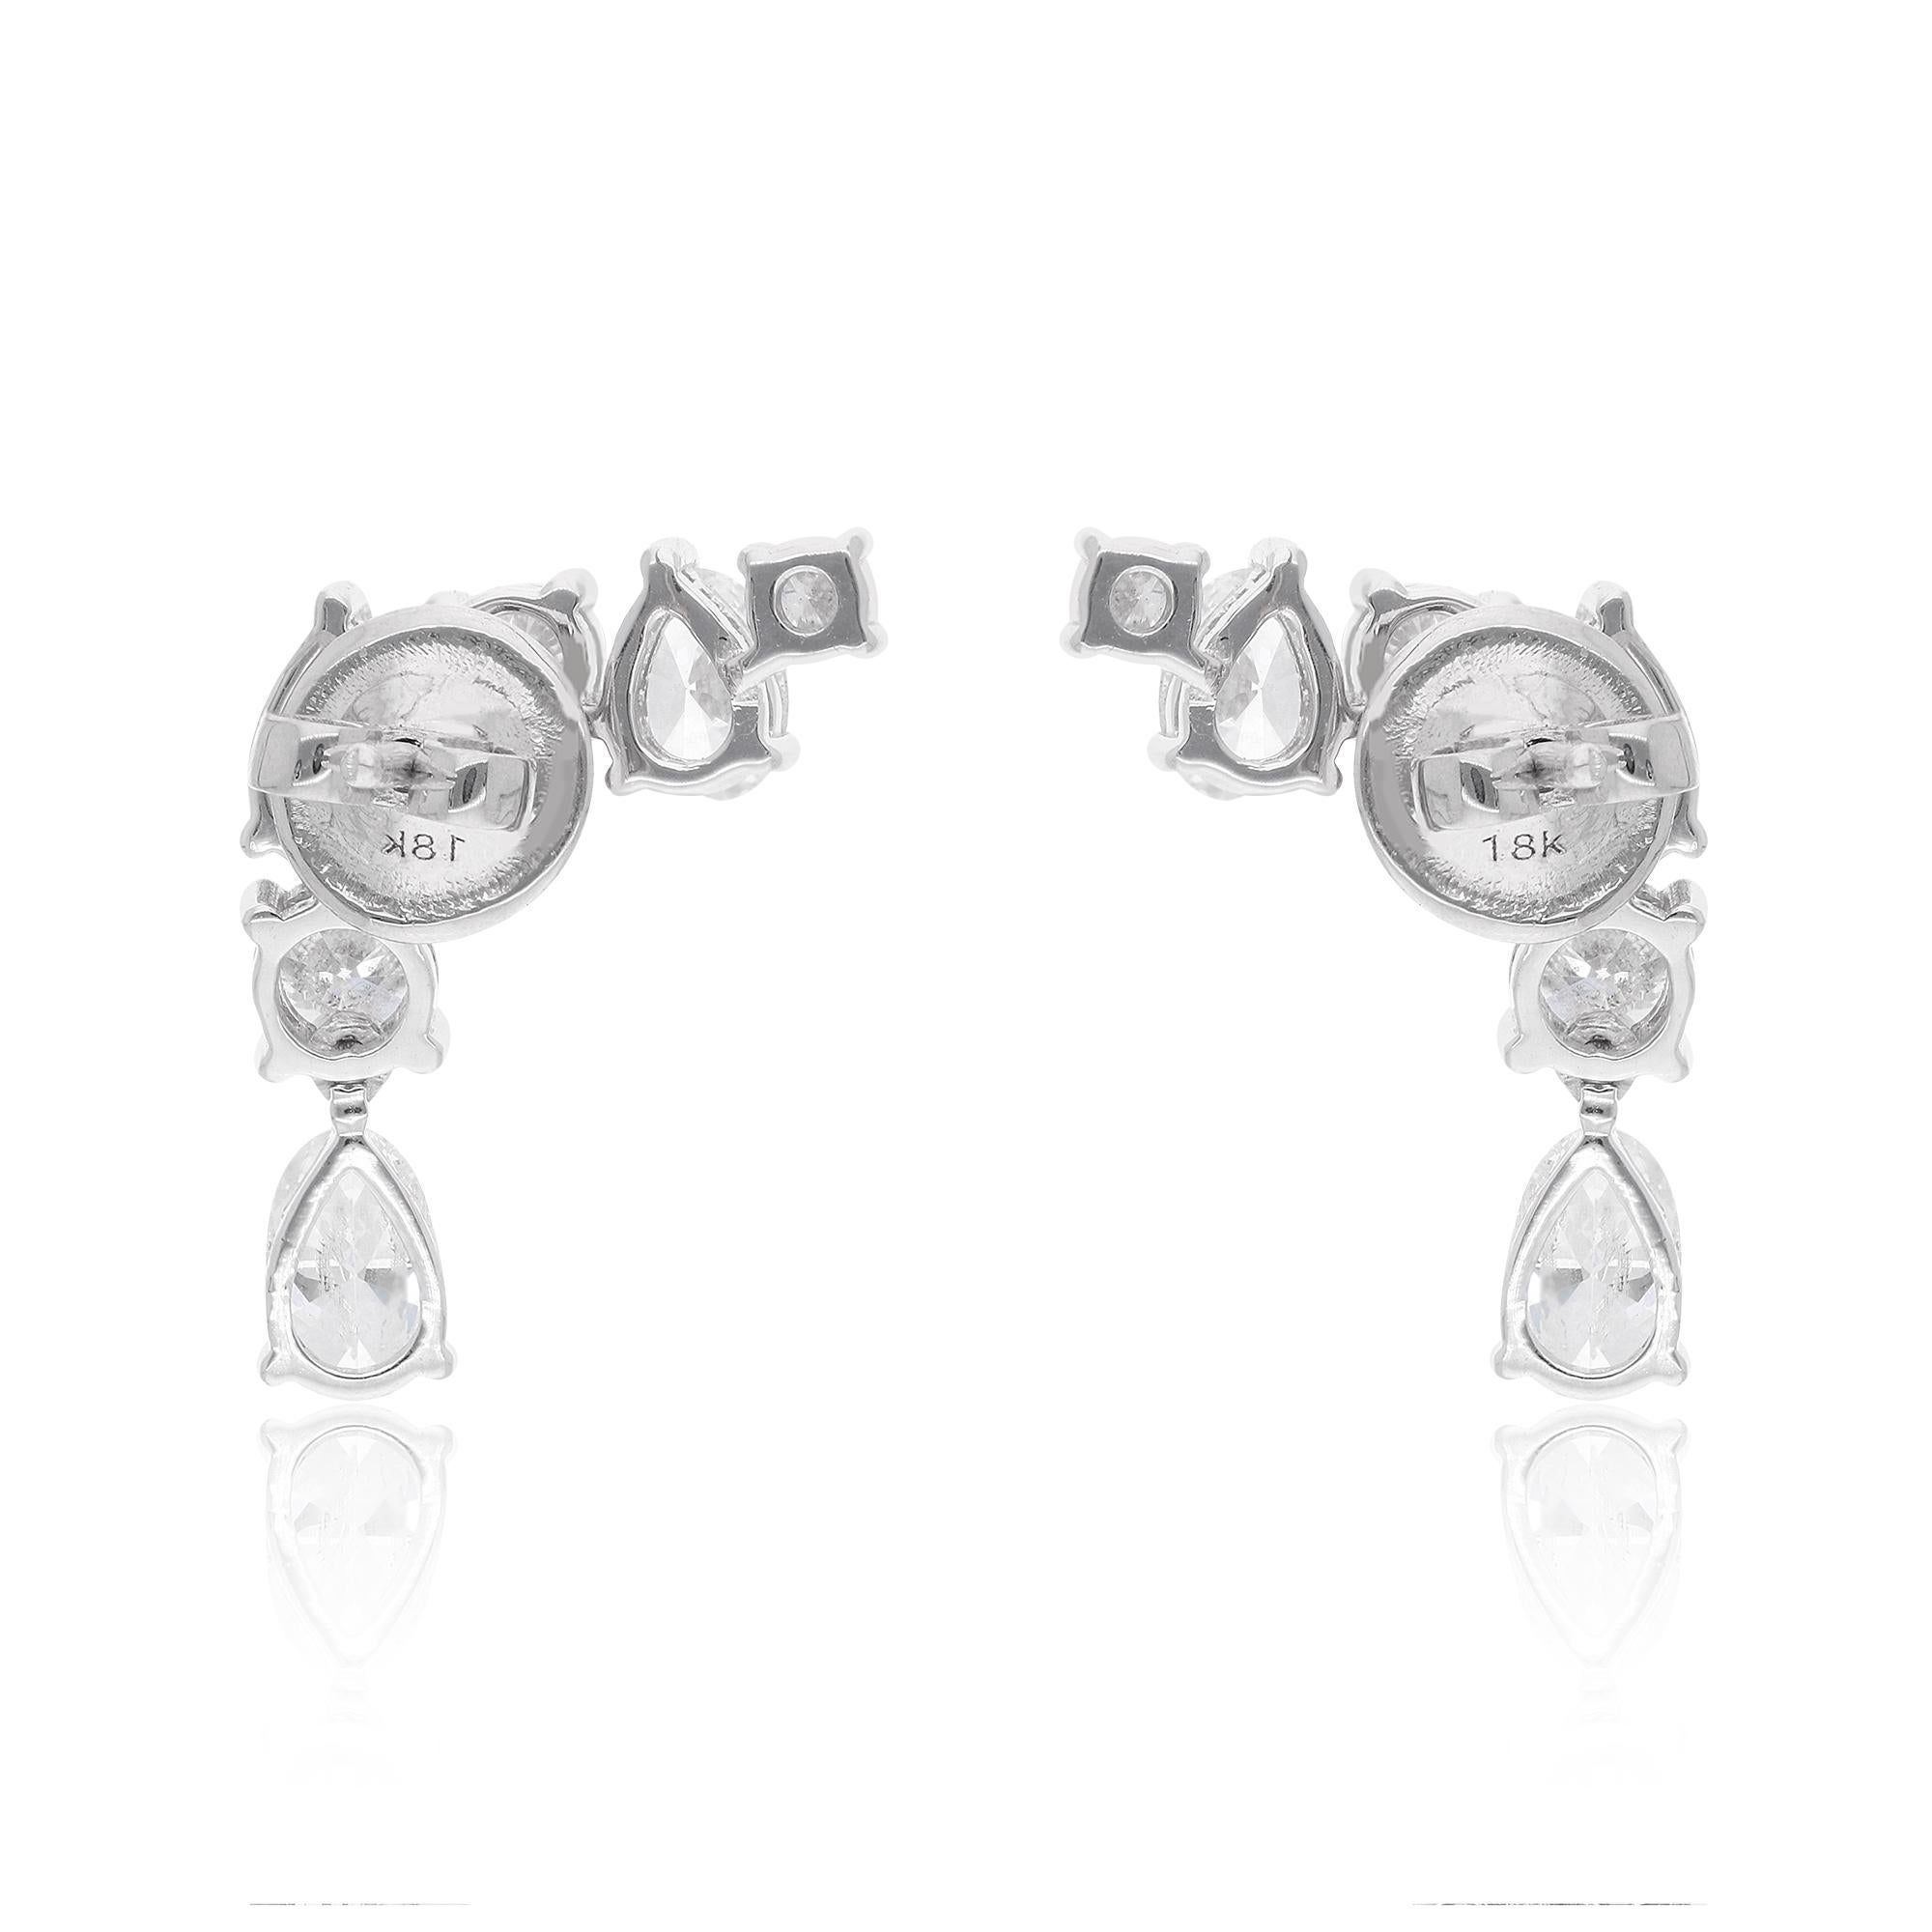 Oval Cut 2.83 Carat Oval & Round Diamond Earrings 14 Karat White Gold Handmade Jewelry For Sale